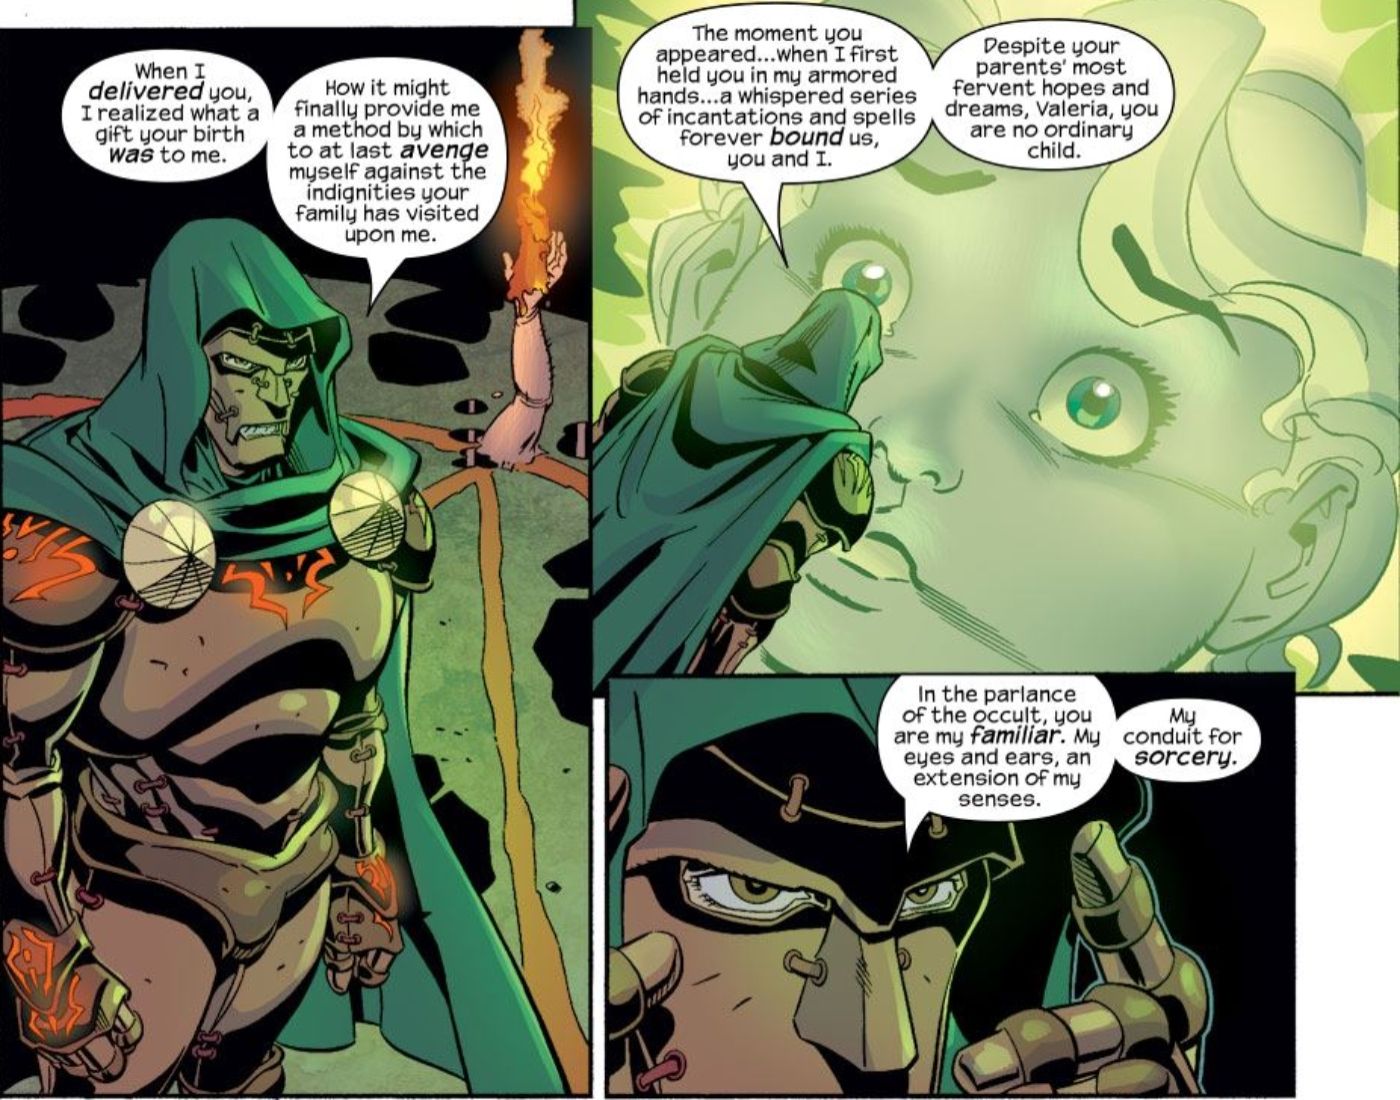 Doctor Doom claiming Valeria Richards as his 'familiar'.